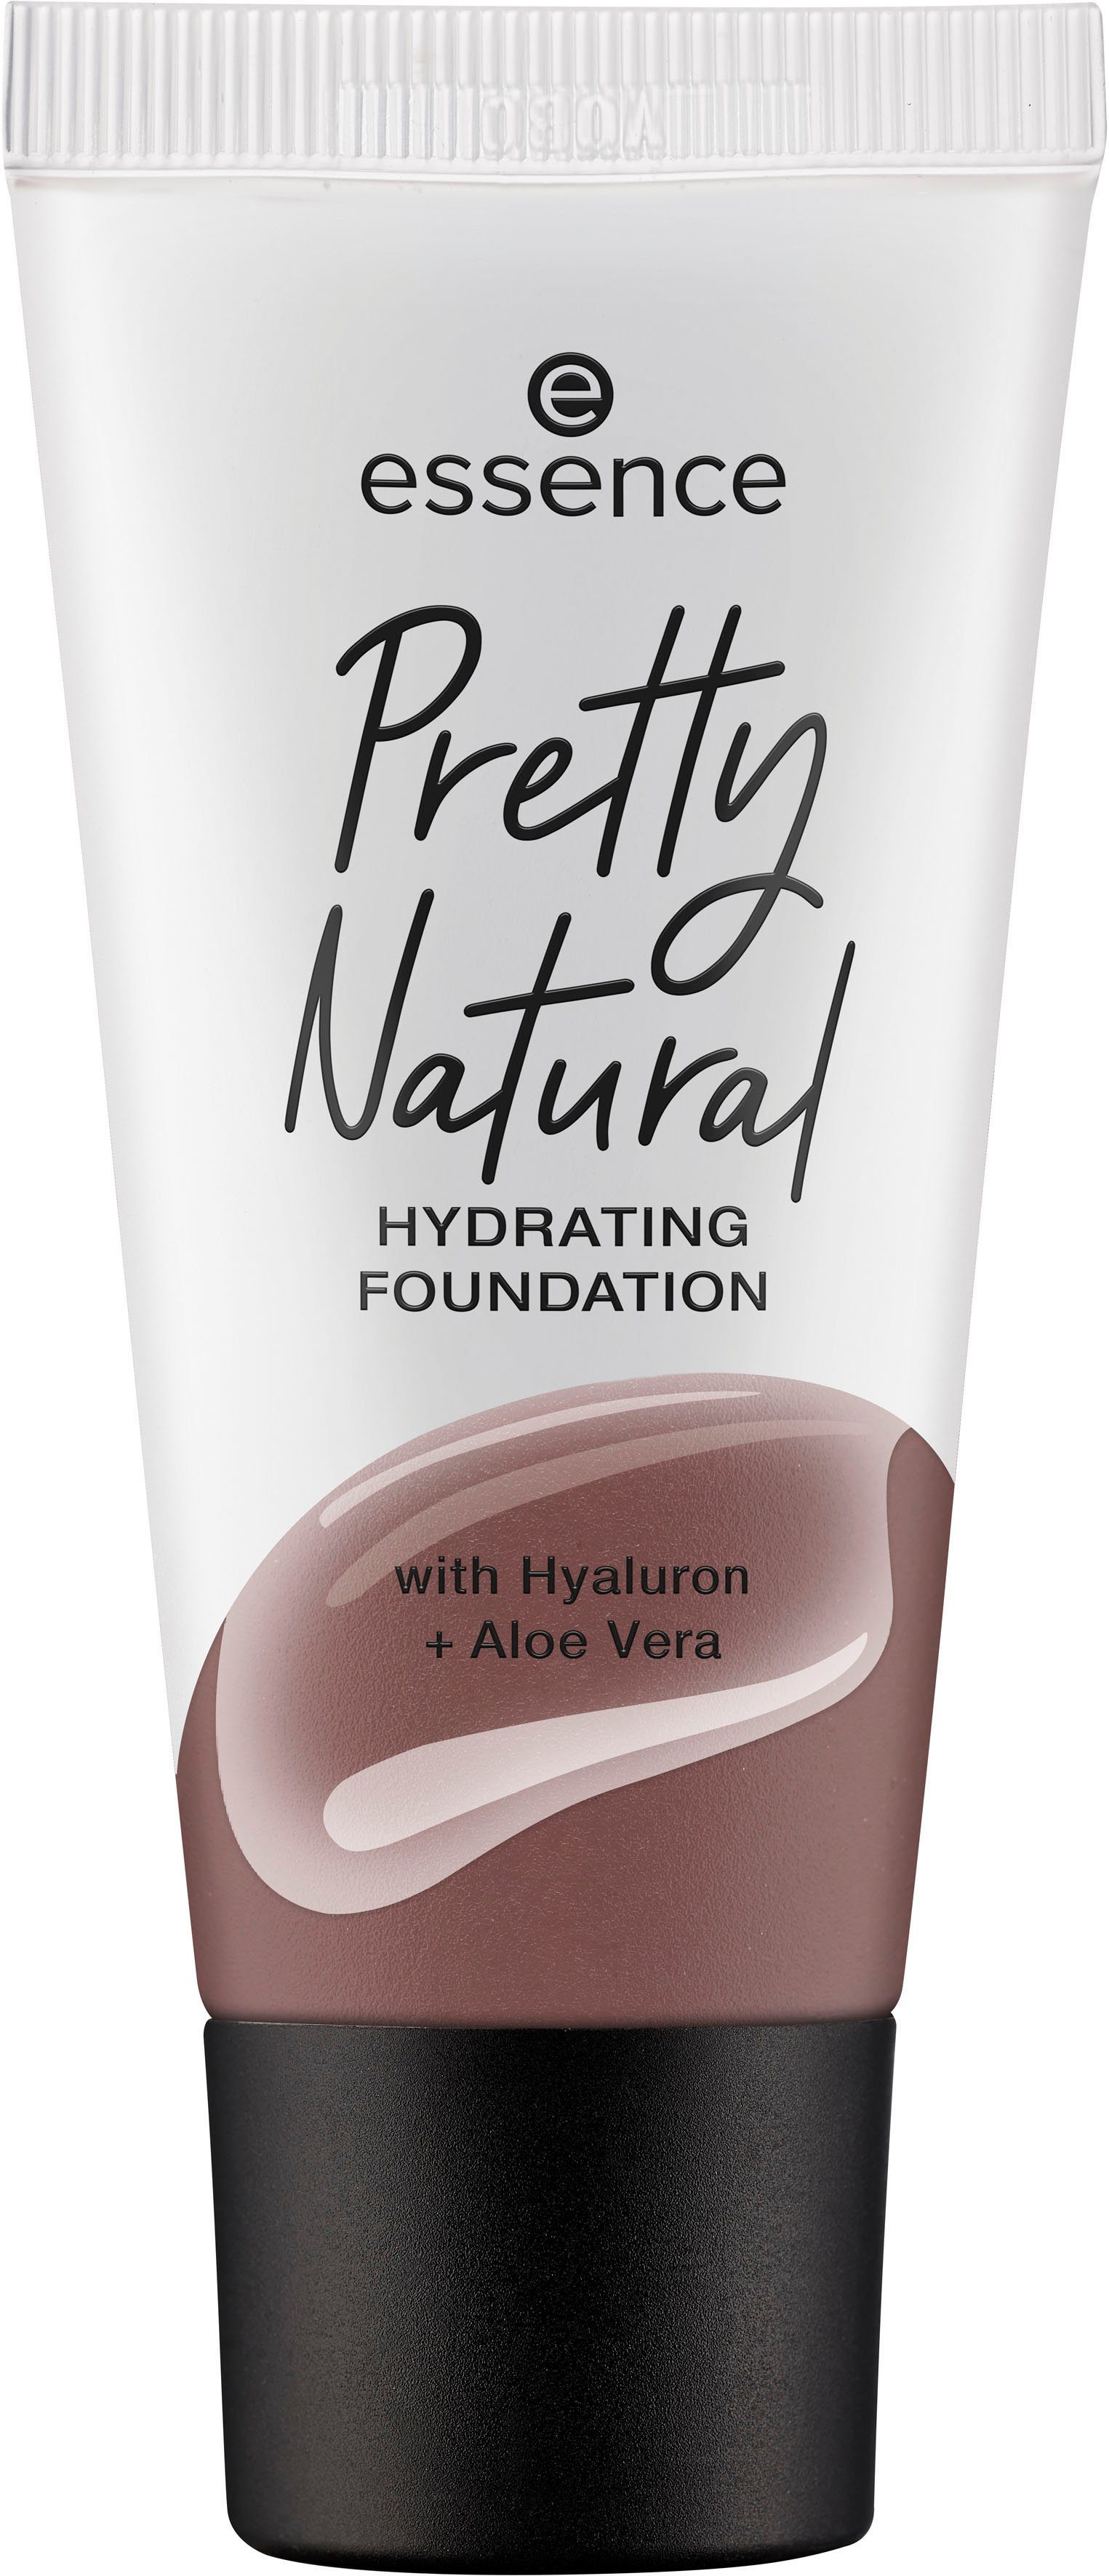 Essence Foundation Pretty Natural 3-tlg. Cool HYDRATING, Mahogany